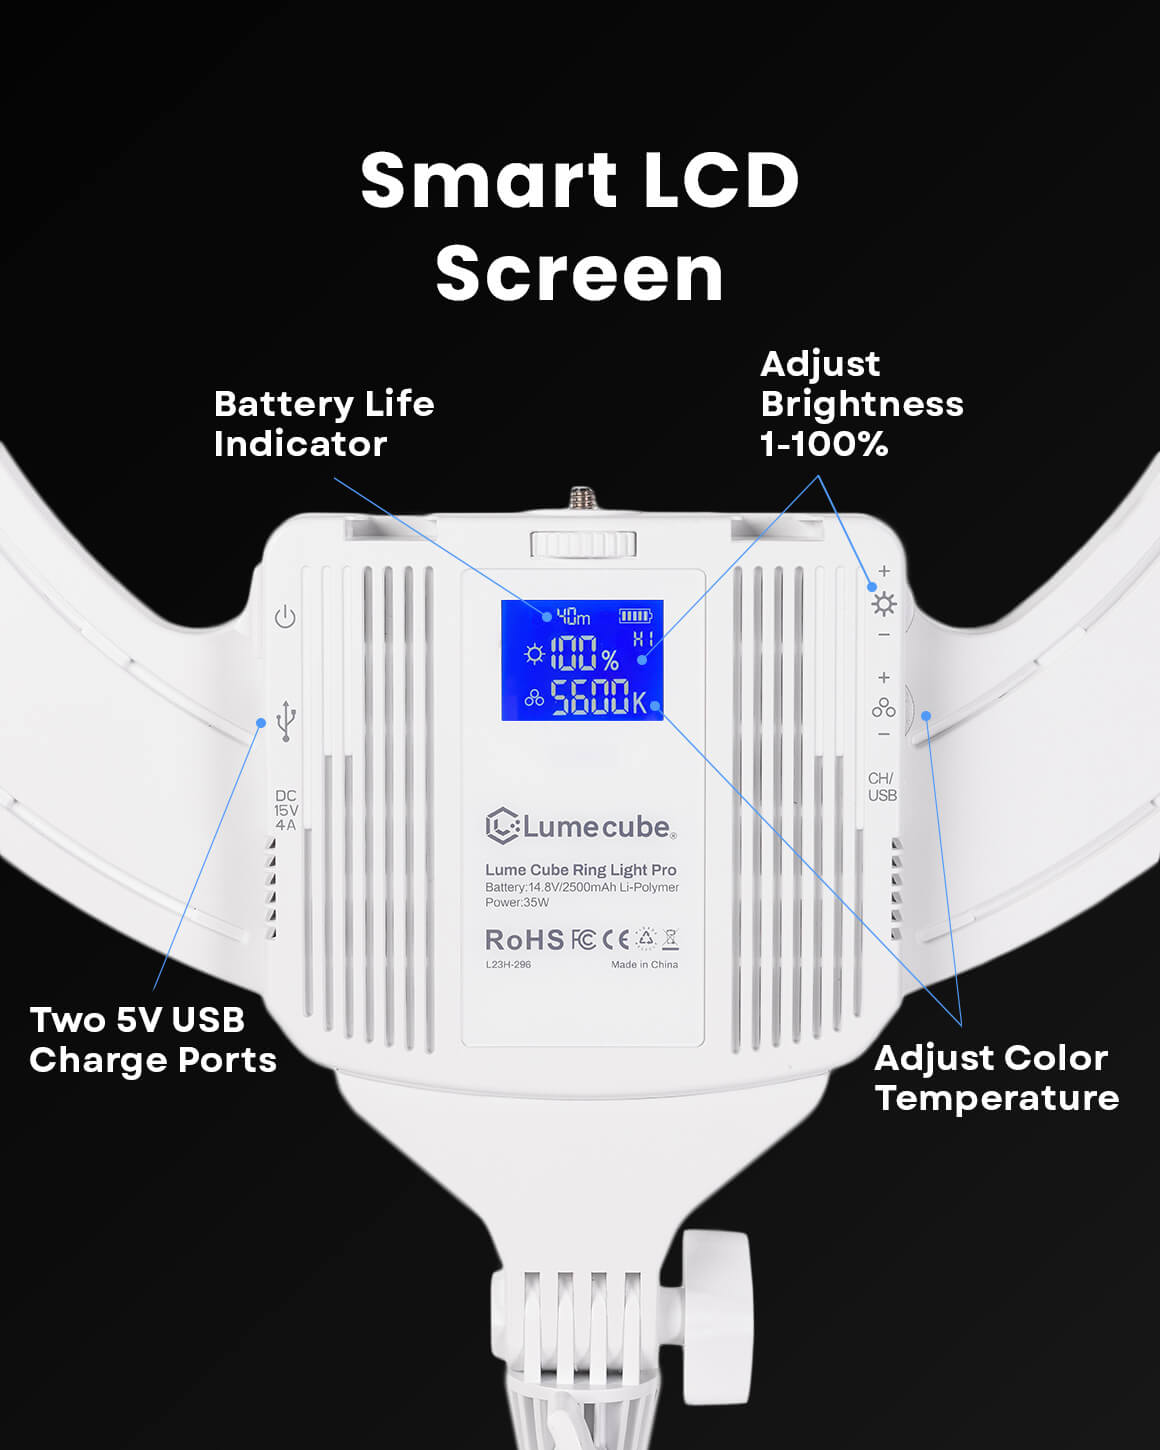 Smart LCD Screen on Lume Cube Cordless Ring Light Pro